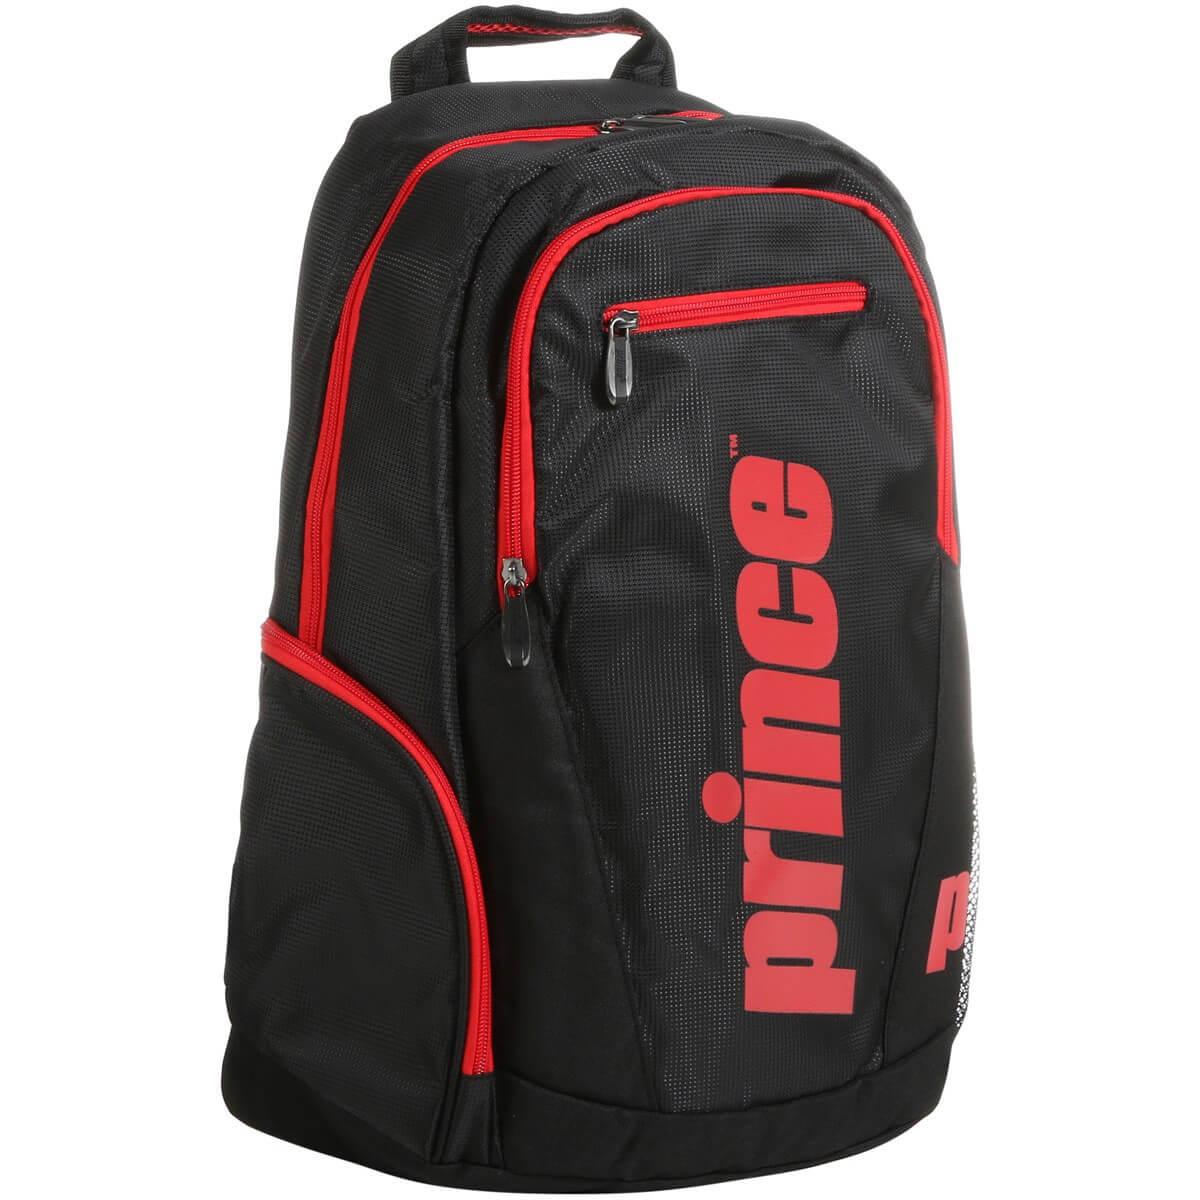 Prince Backpack - Black/Red - Tennisnuts.com